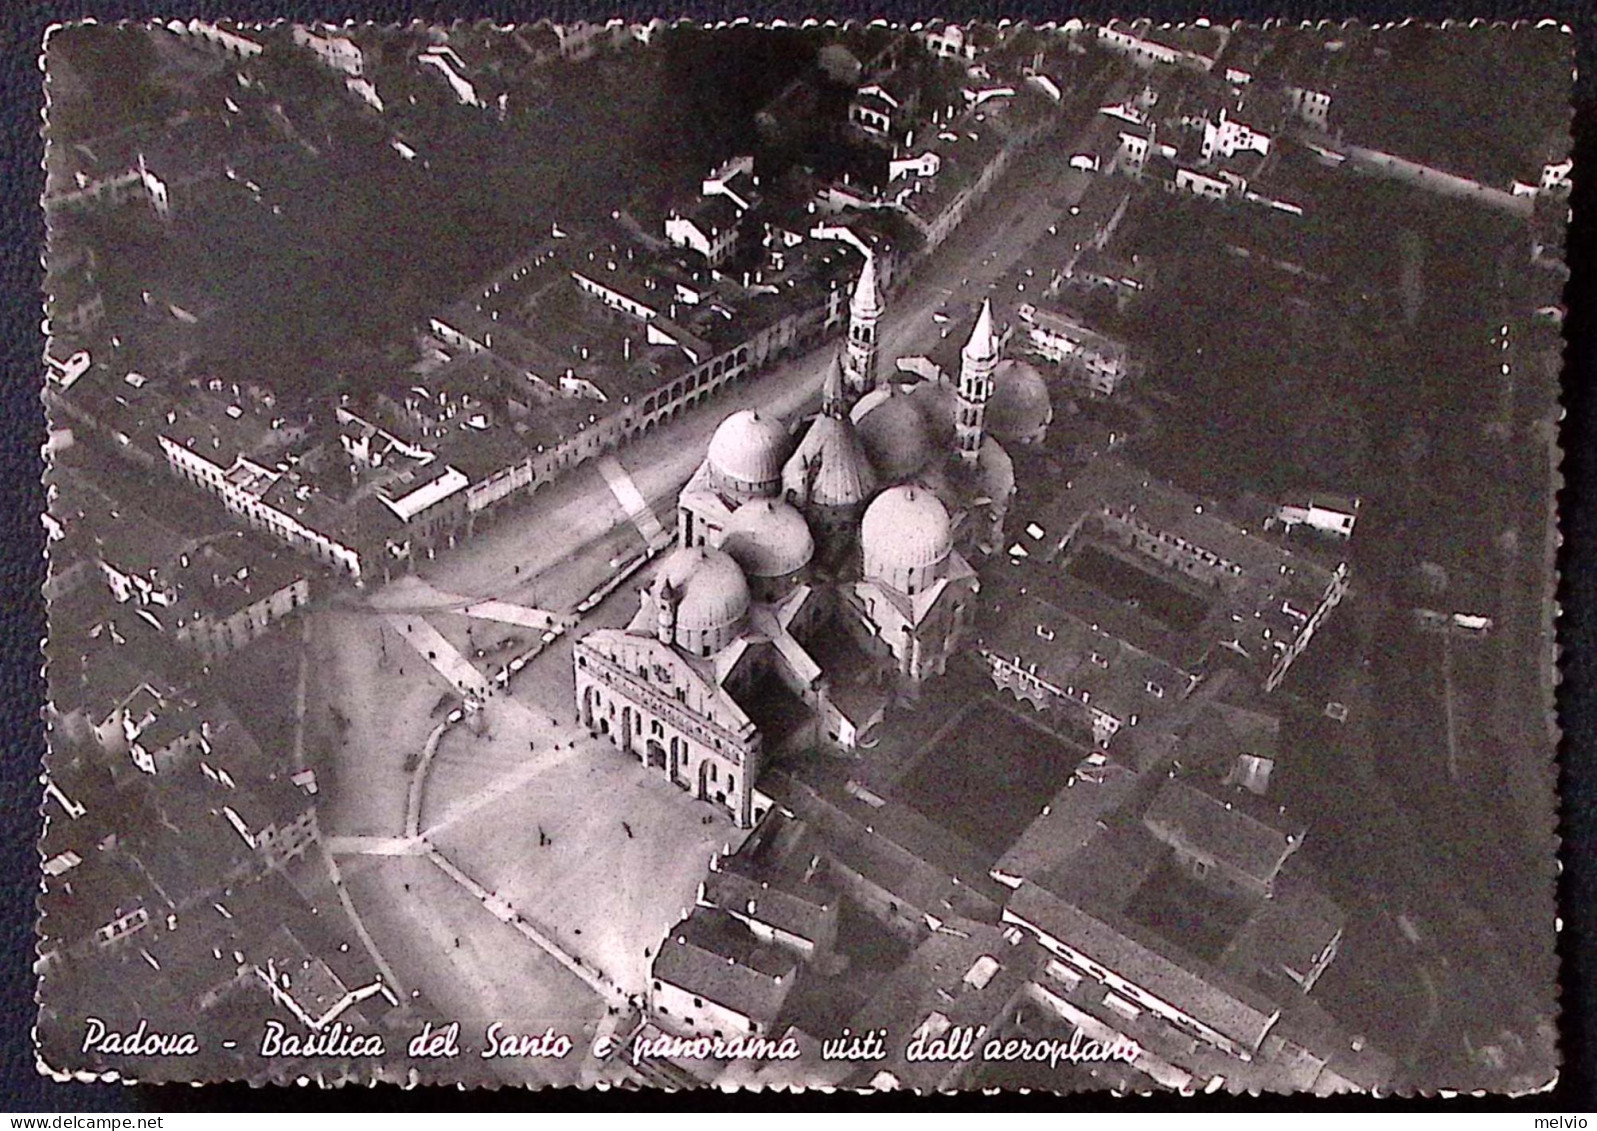 1949-PADOVA Basilica Del Santo E Panorama Dall'aeroplano Viaggiata Padova (25.8) - Padova (Padua)